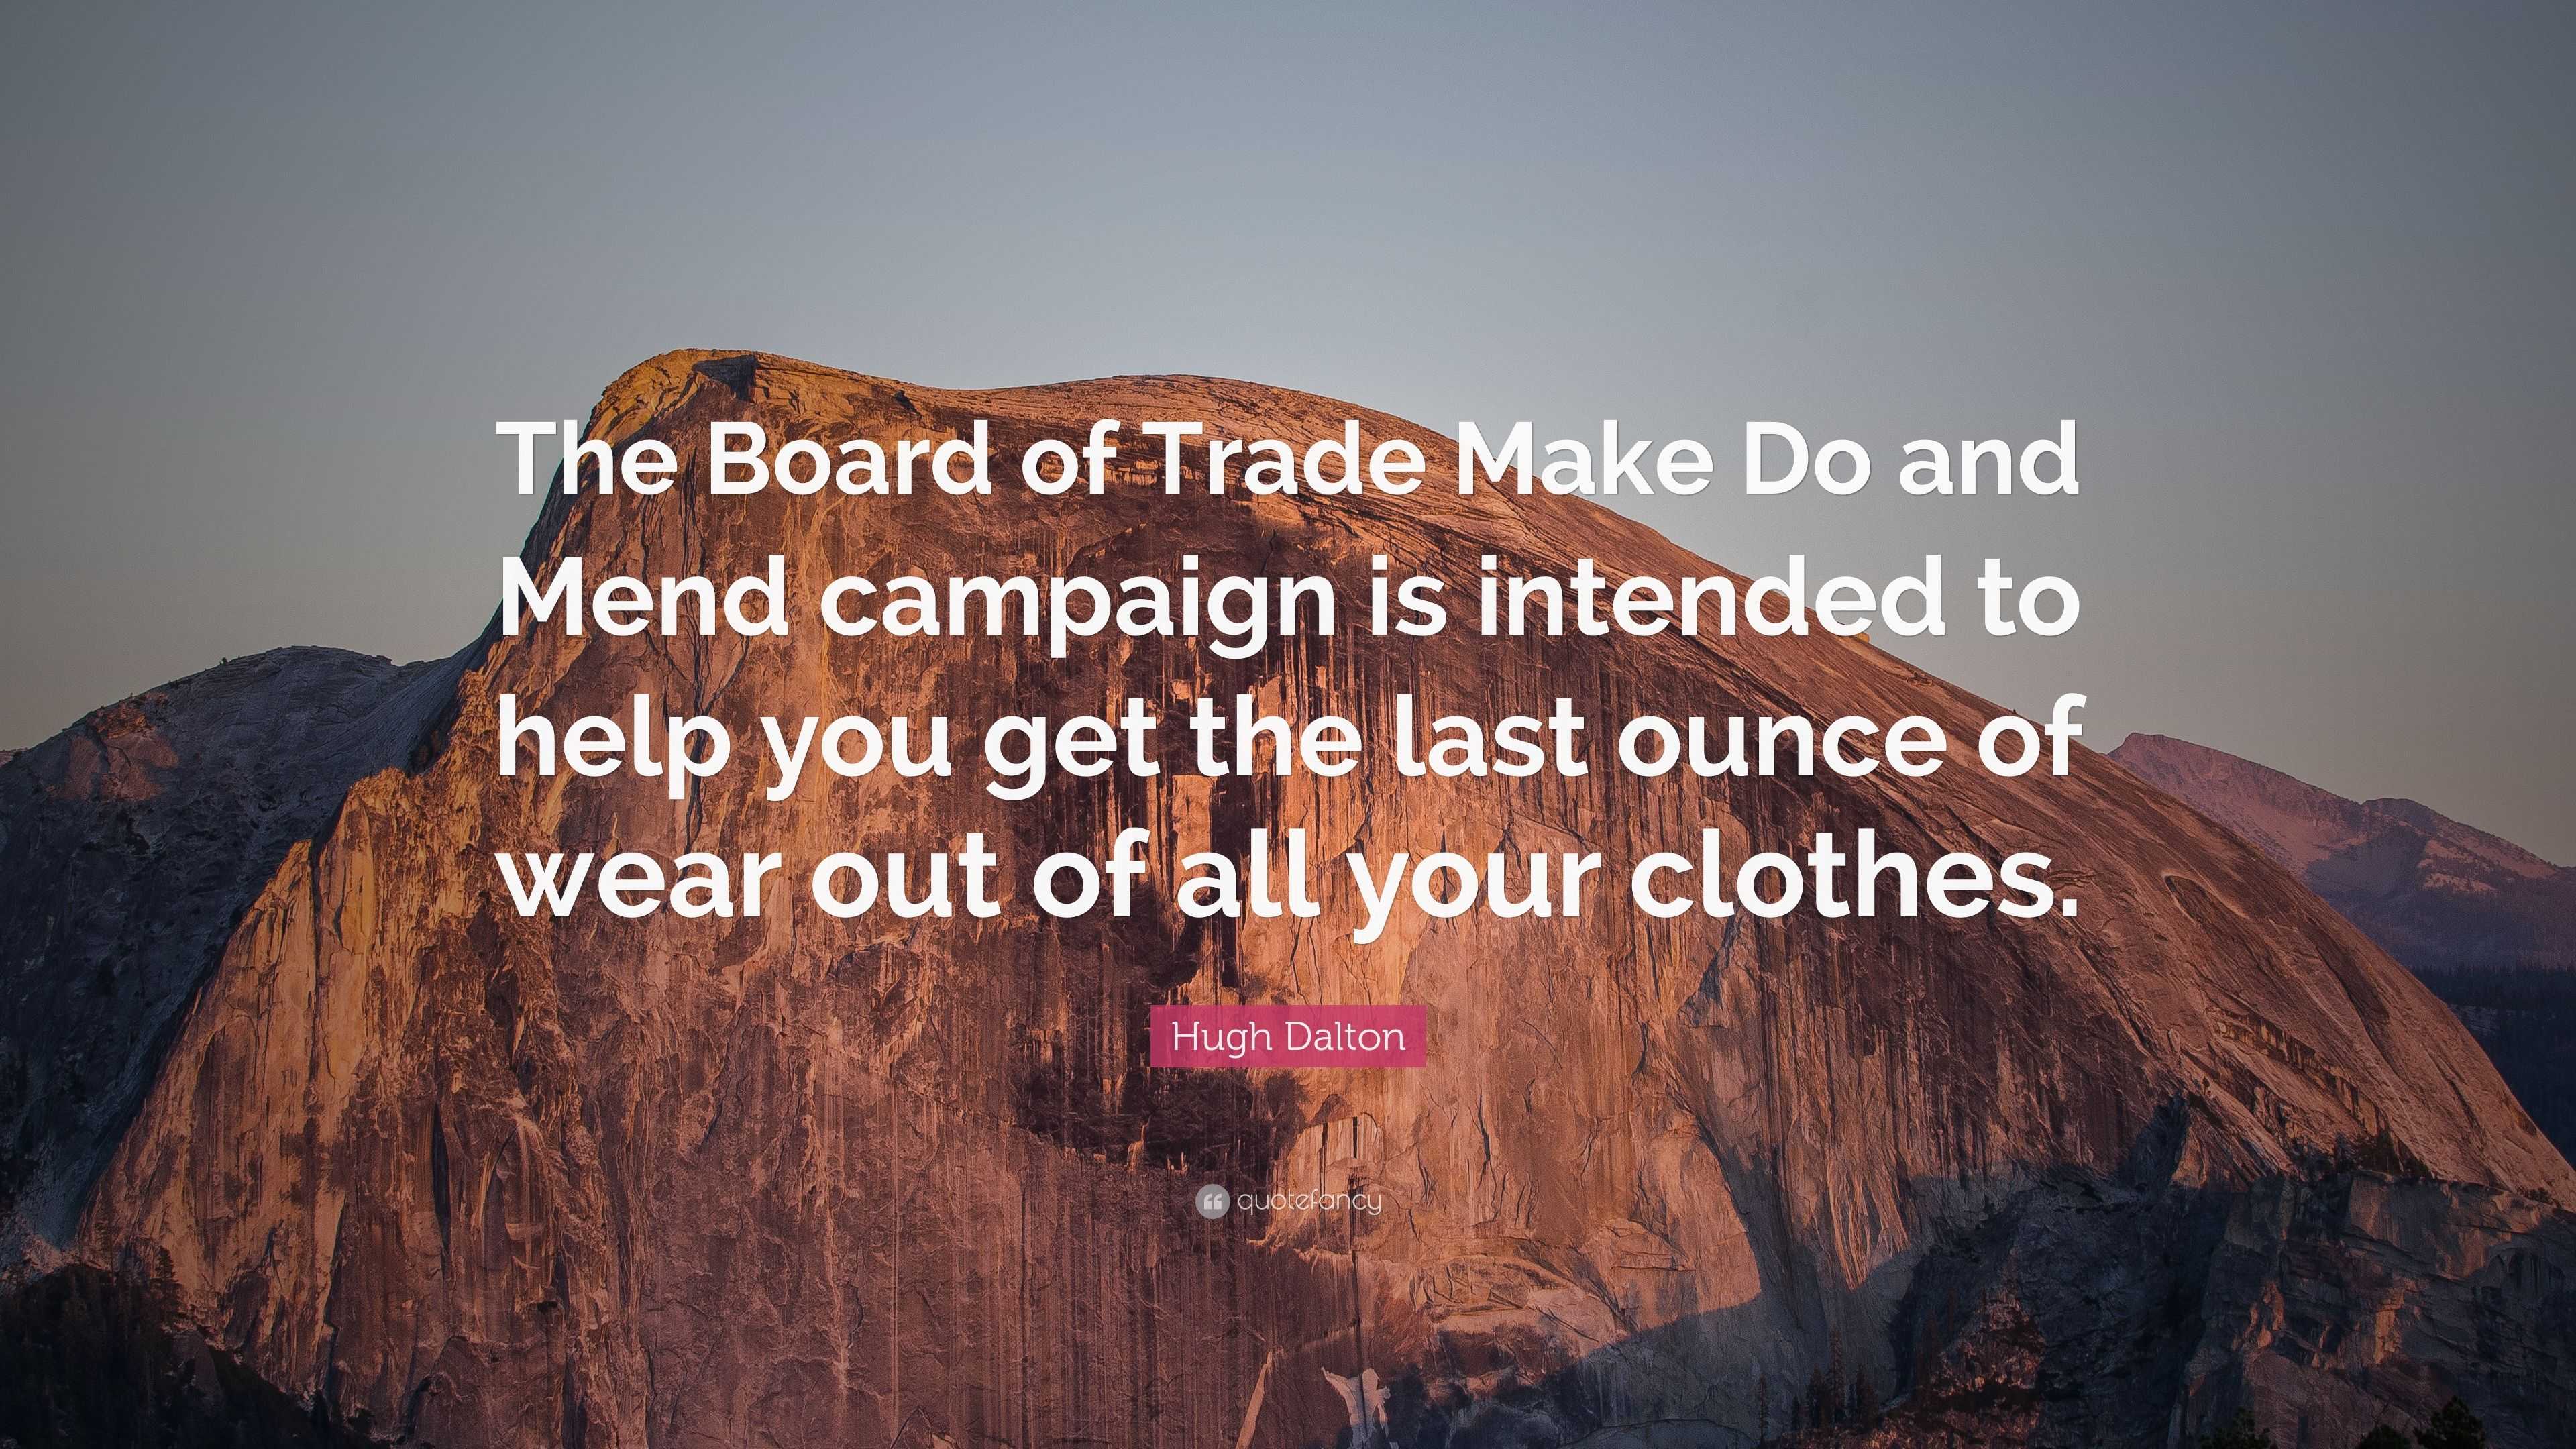 Go Through Your Wardrobe - Make-Do and Mend